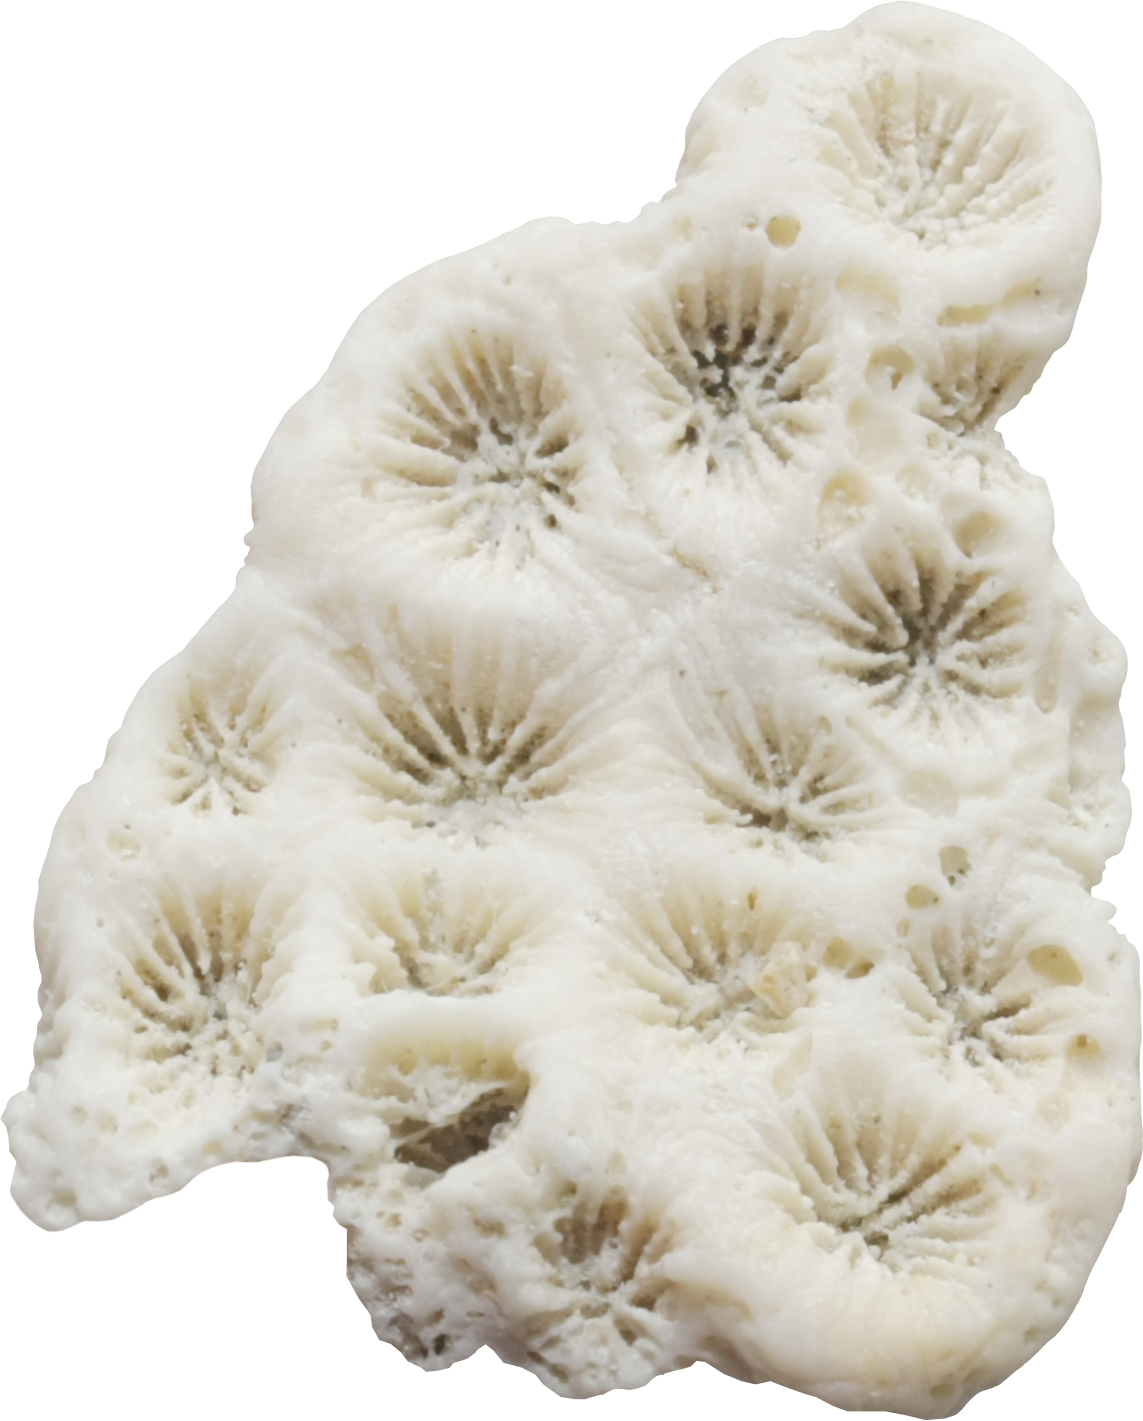 Водоросли ракушки. Белый коралл. Ракушки на прозрачном фоне для фотошопа. Белый коралл на белом фоне. Меха, раковины, кораллы.